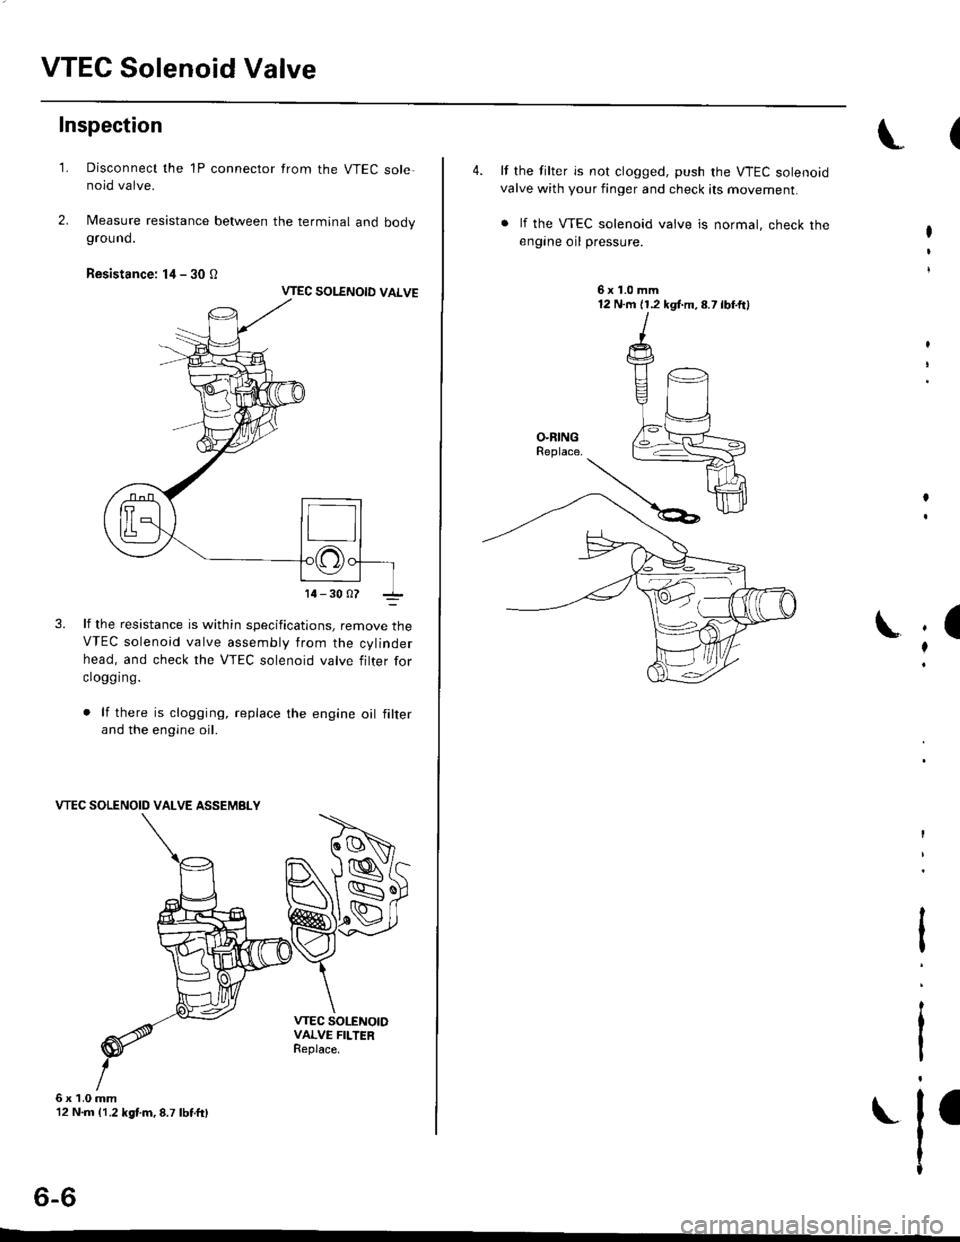 HONDA CIVIC 1997 6.G Workshop Manual VTEC Solenoid Valve
Inspection
1.
6x1.0mm12 N.m 11.2 kgf.m,8.7 lbtft)
Disconnect the 1P connector from the VTEC sole-noid valve.
Measure resistance between the terminal and bodyground.
Resistance: l4 